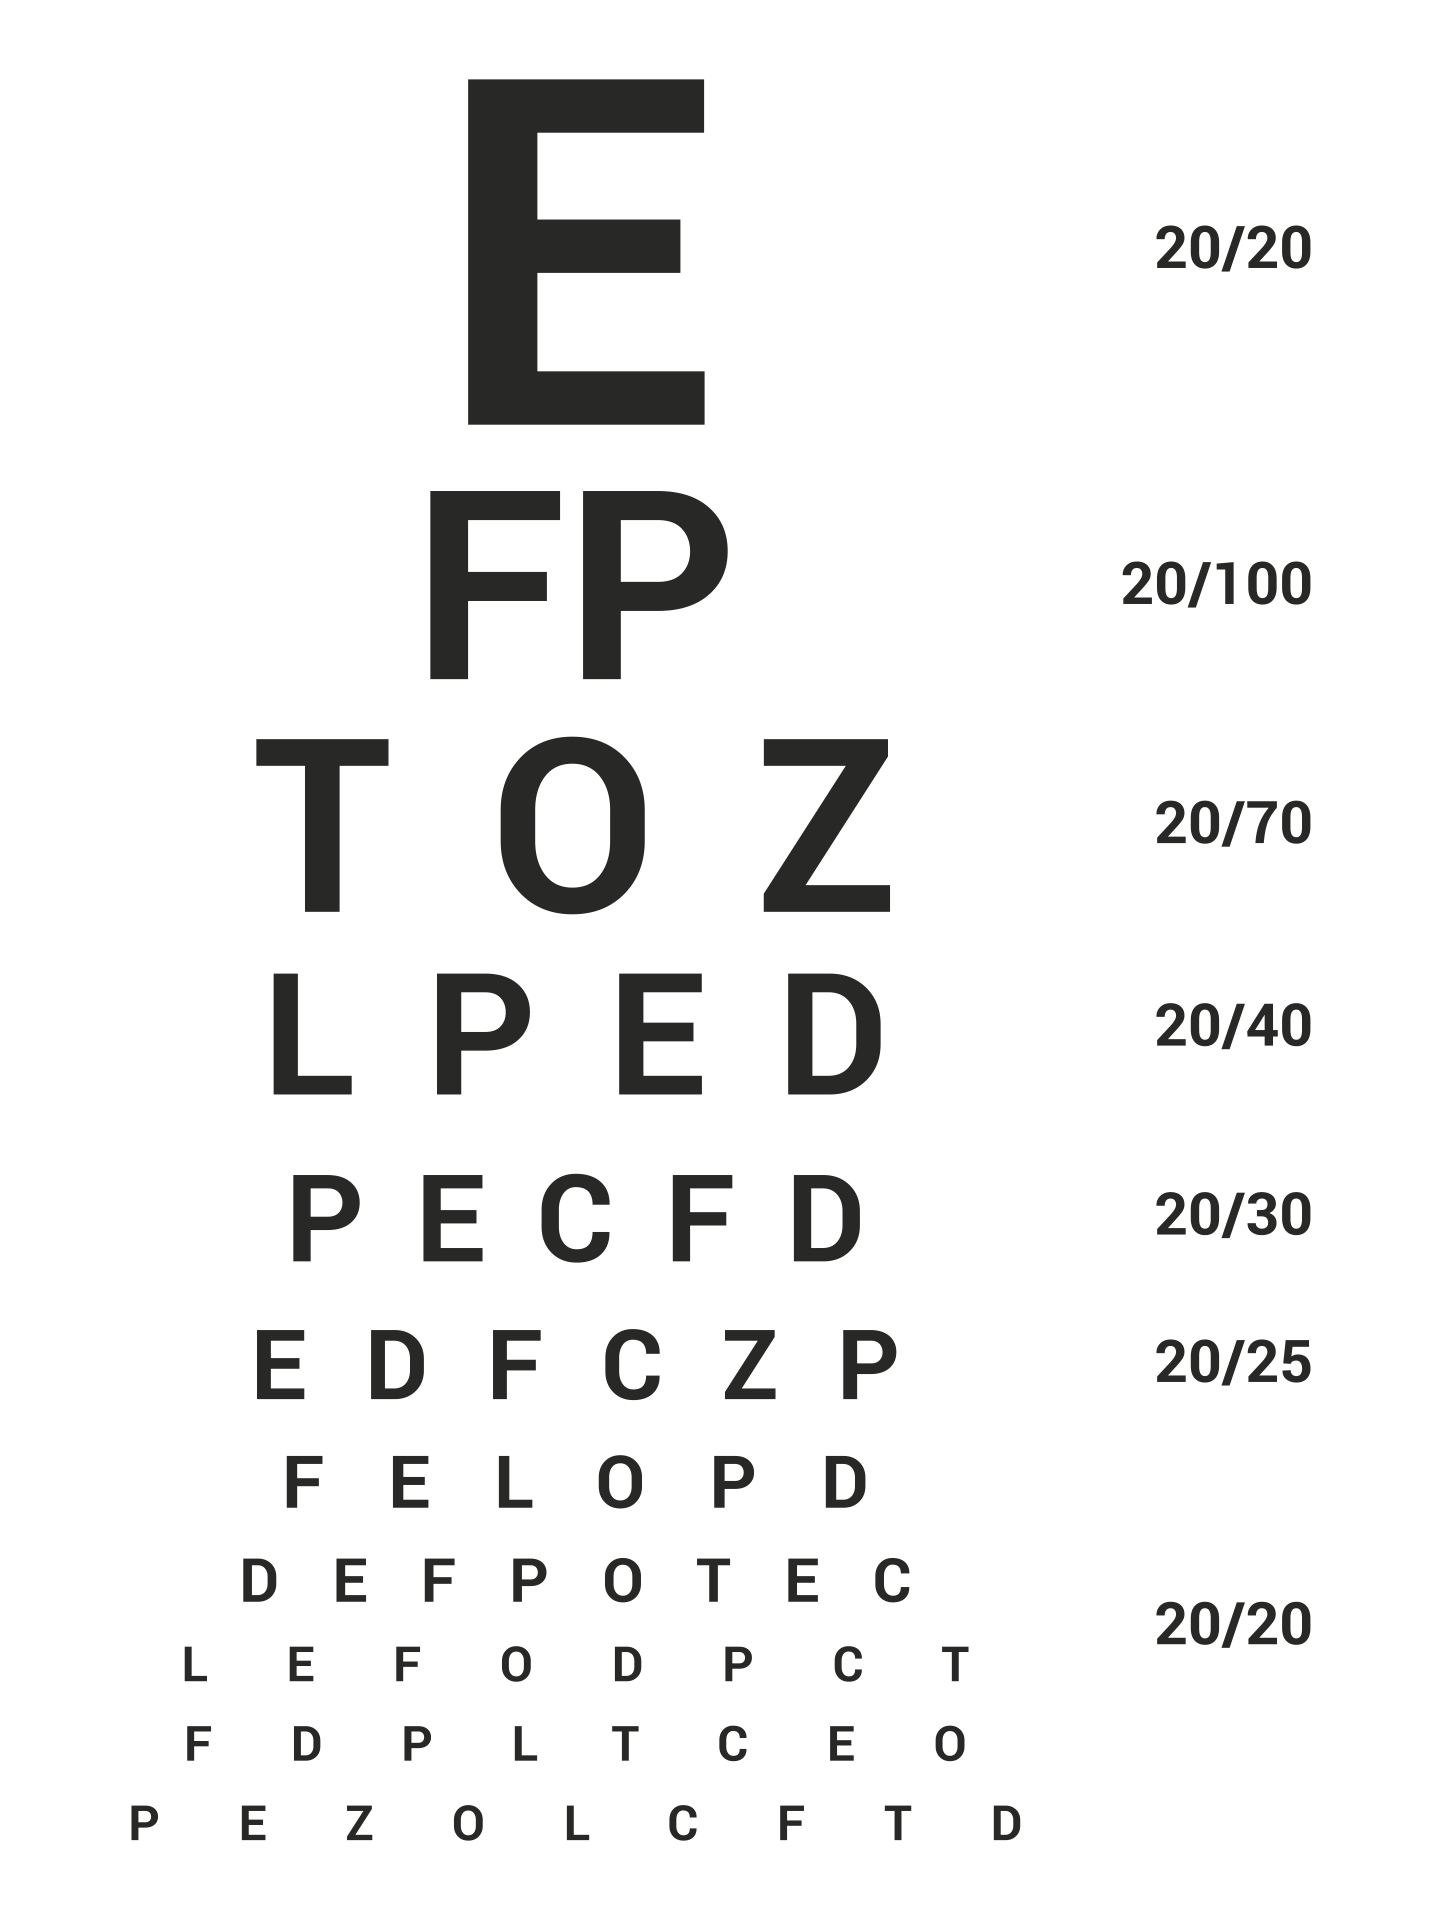 How To Use Eye Chart - Image to u